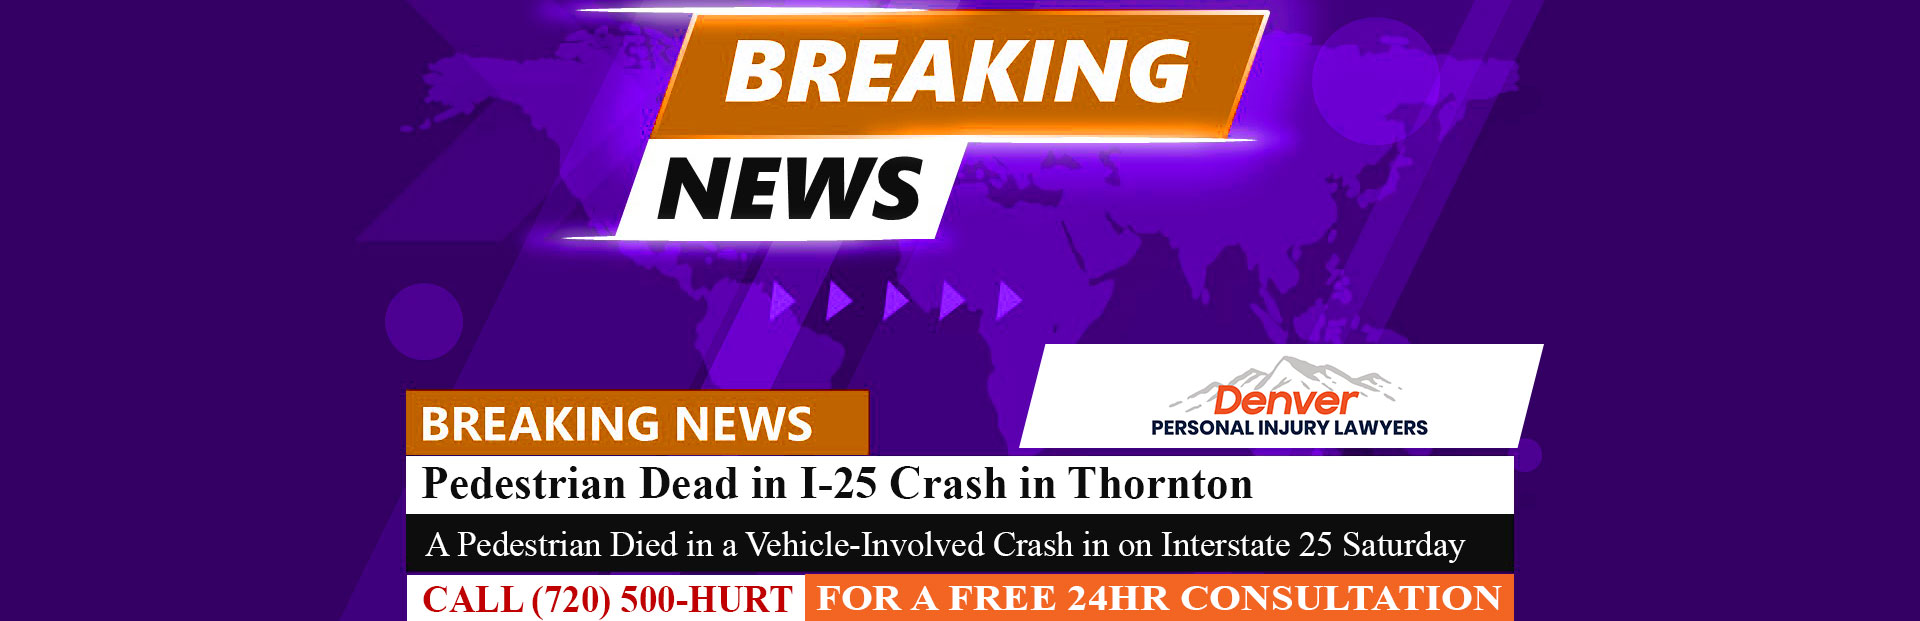 [10-16-22] Pedestrian Dead in I-25 Crash in Thornton